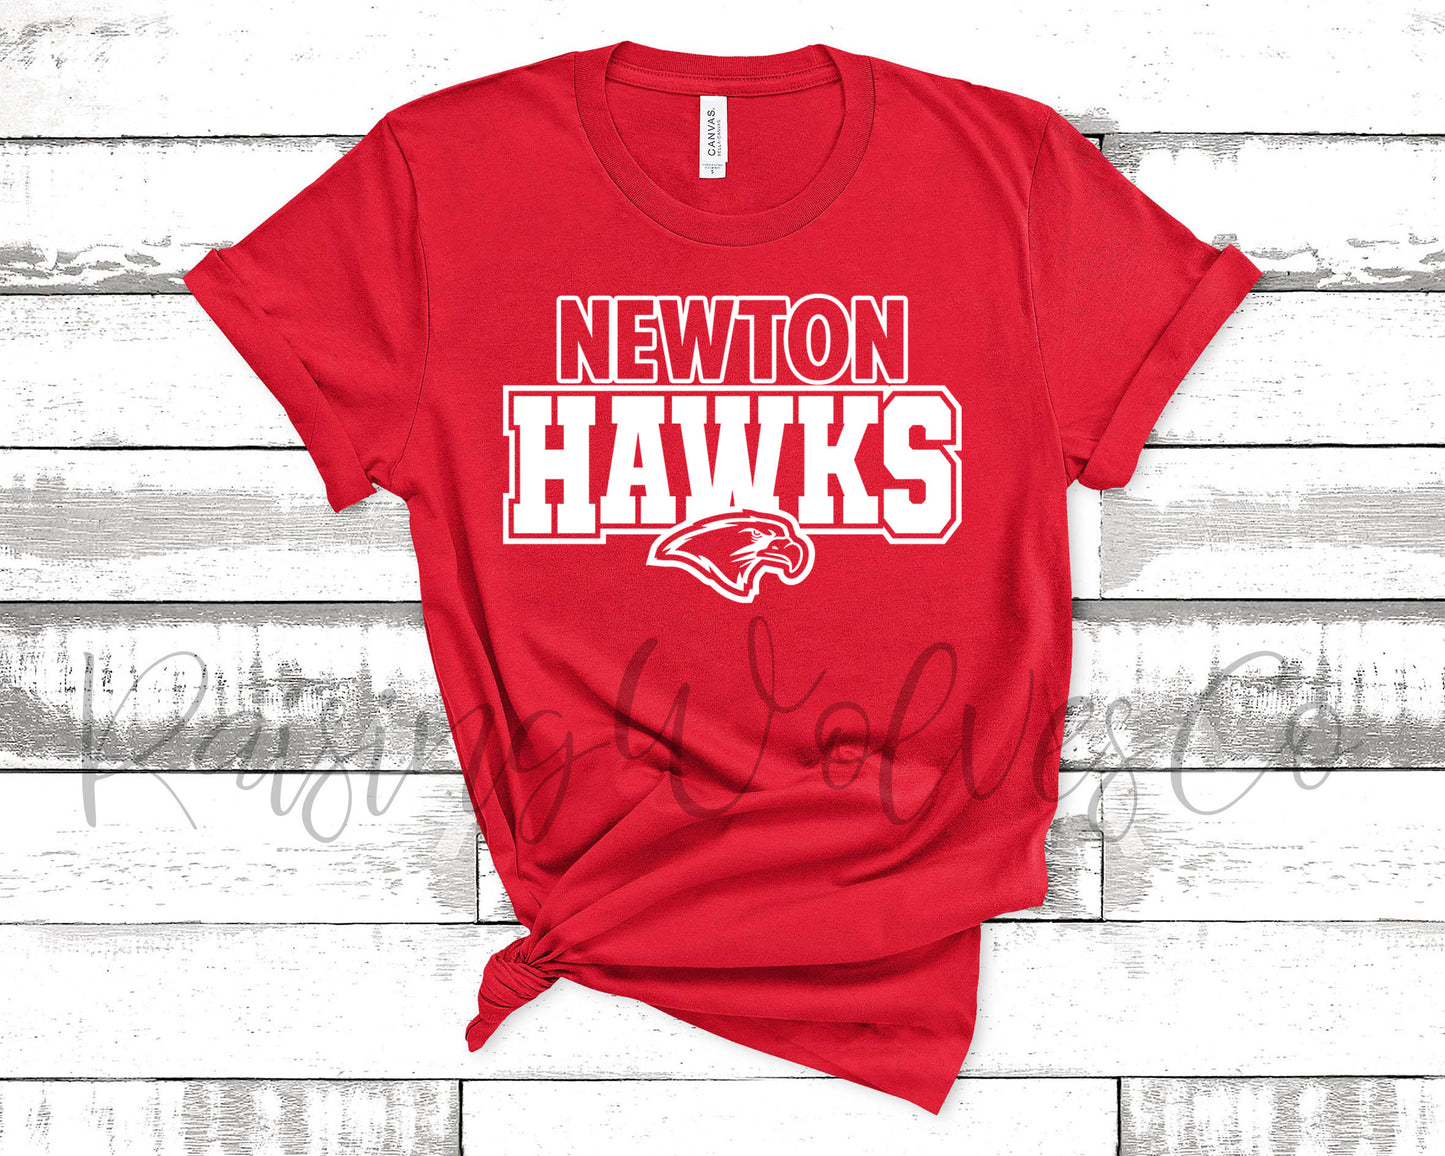 Newton Hawks Red Tee White Lettering